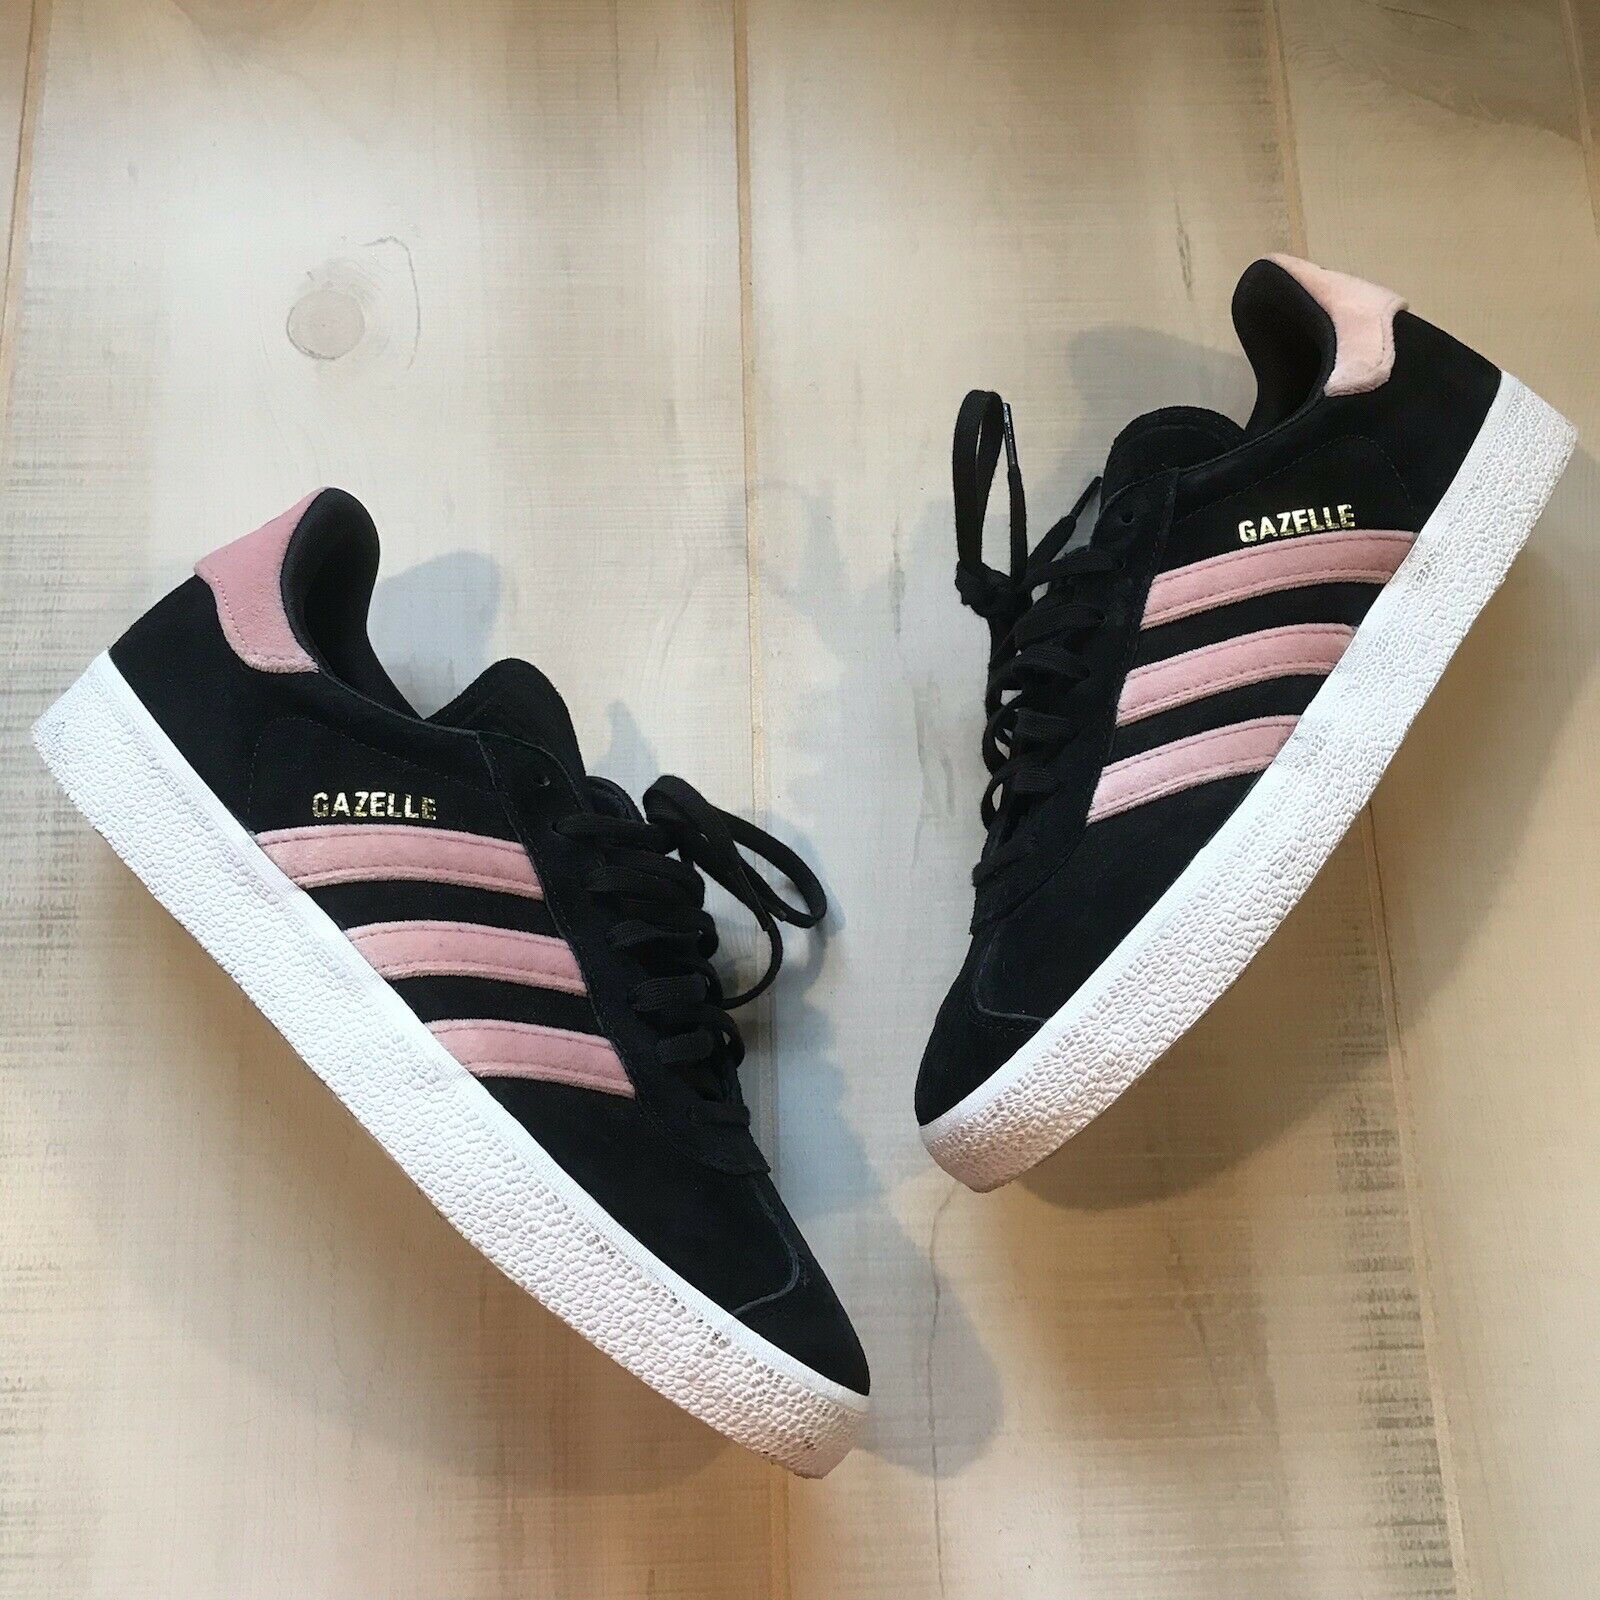 Adidas Gazelle Women’s Velvet Sneakers Tennis Shoes Black Pink 9.5 Women’s